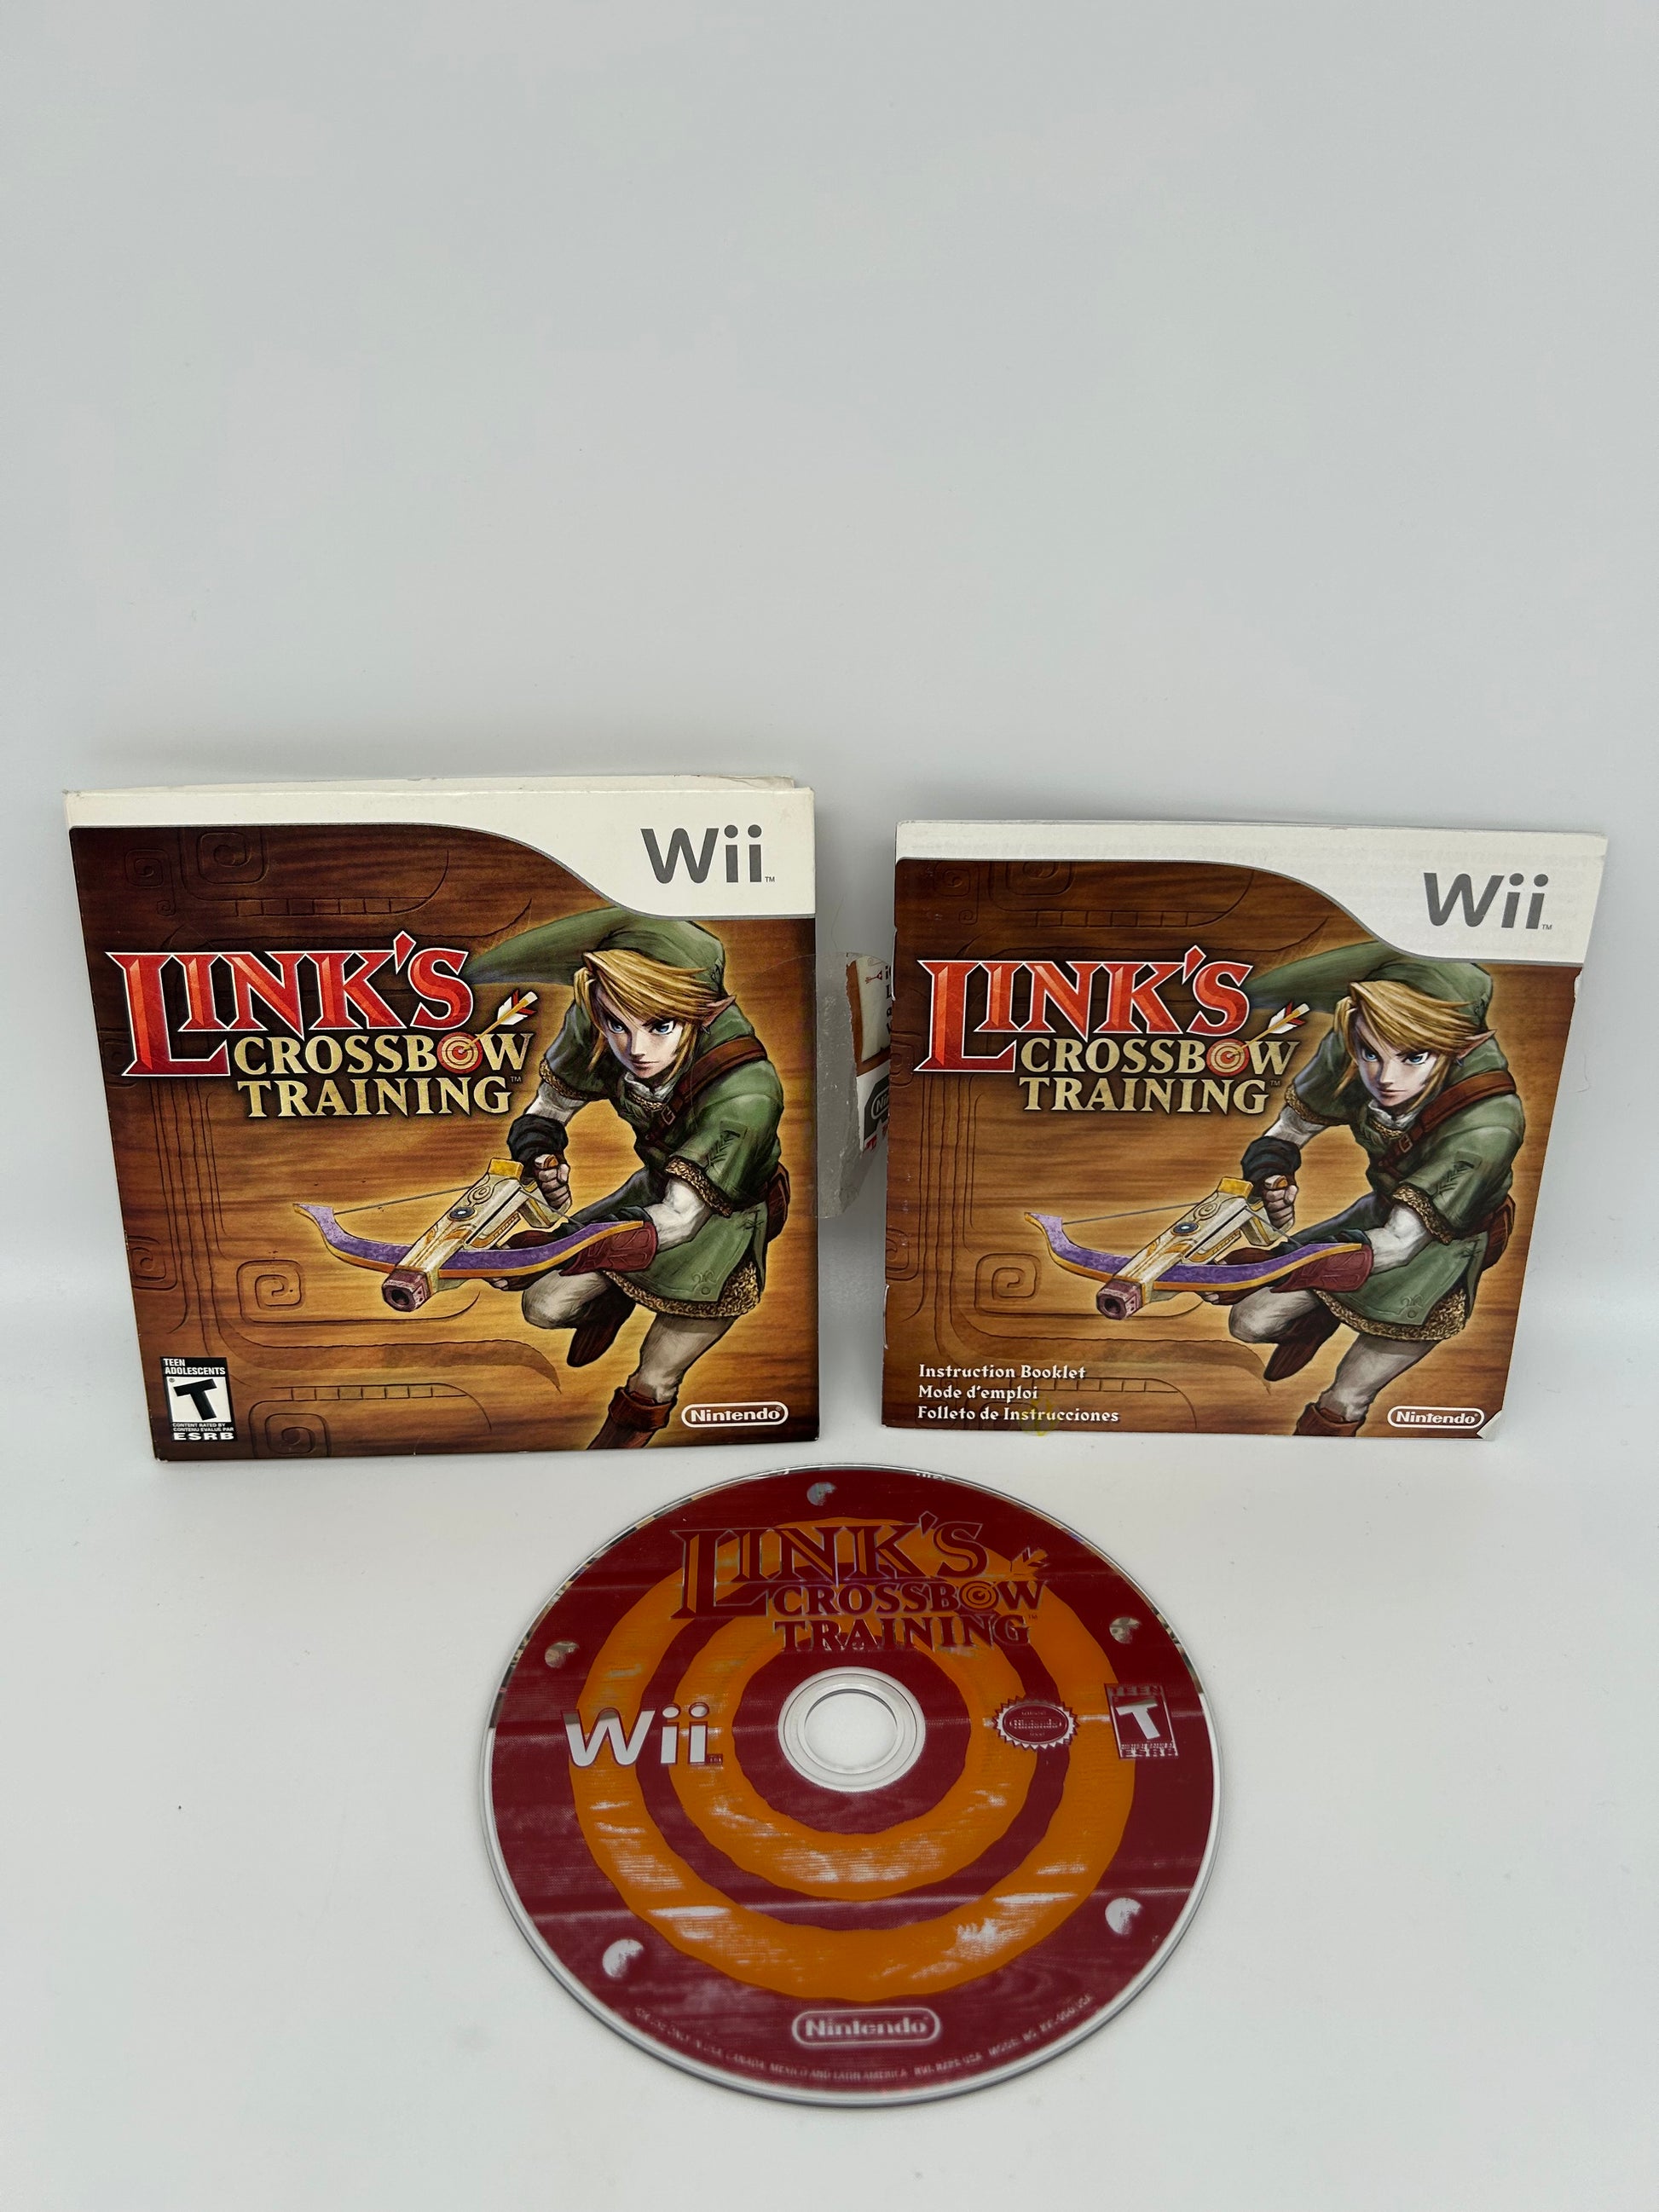 PiXEL-RETRO.COM : NINTENDO WII COMPLET CIB BOX MANUAL GAME NTSC LINK'S CROSSBOW TRAINING